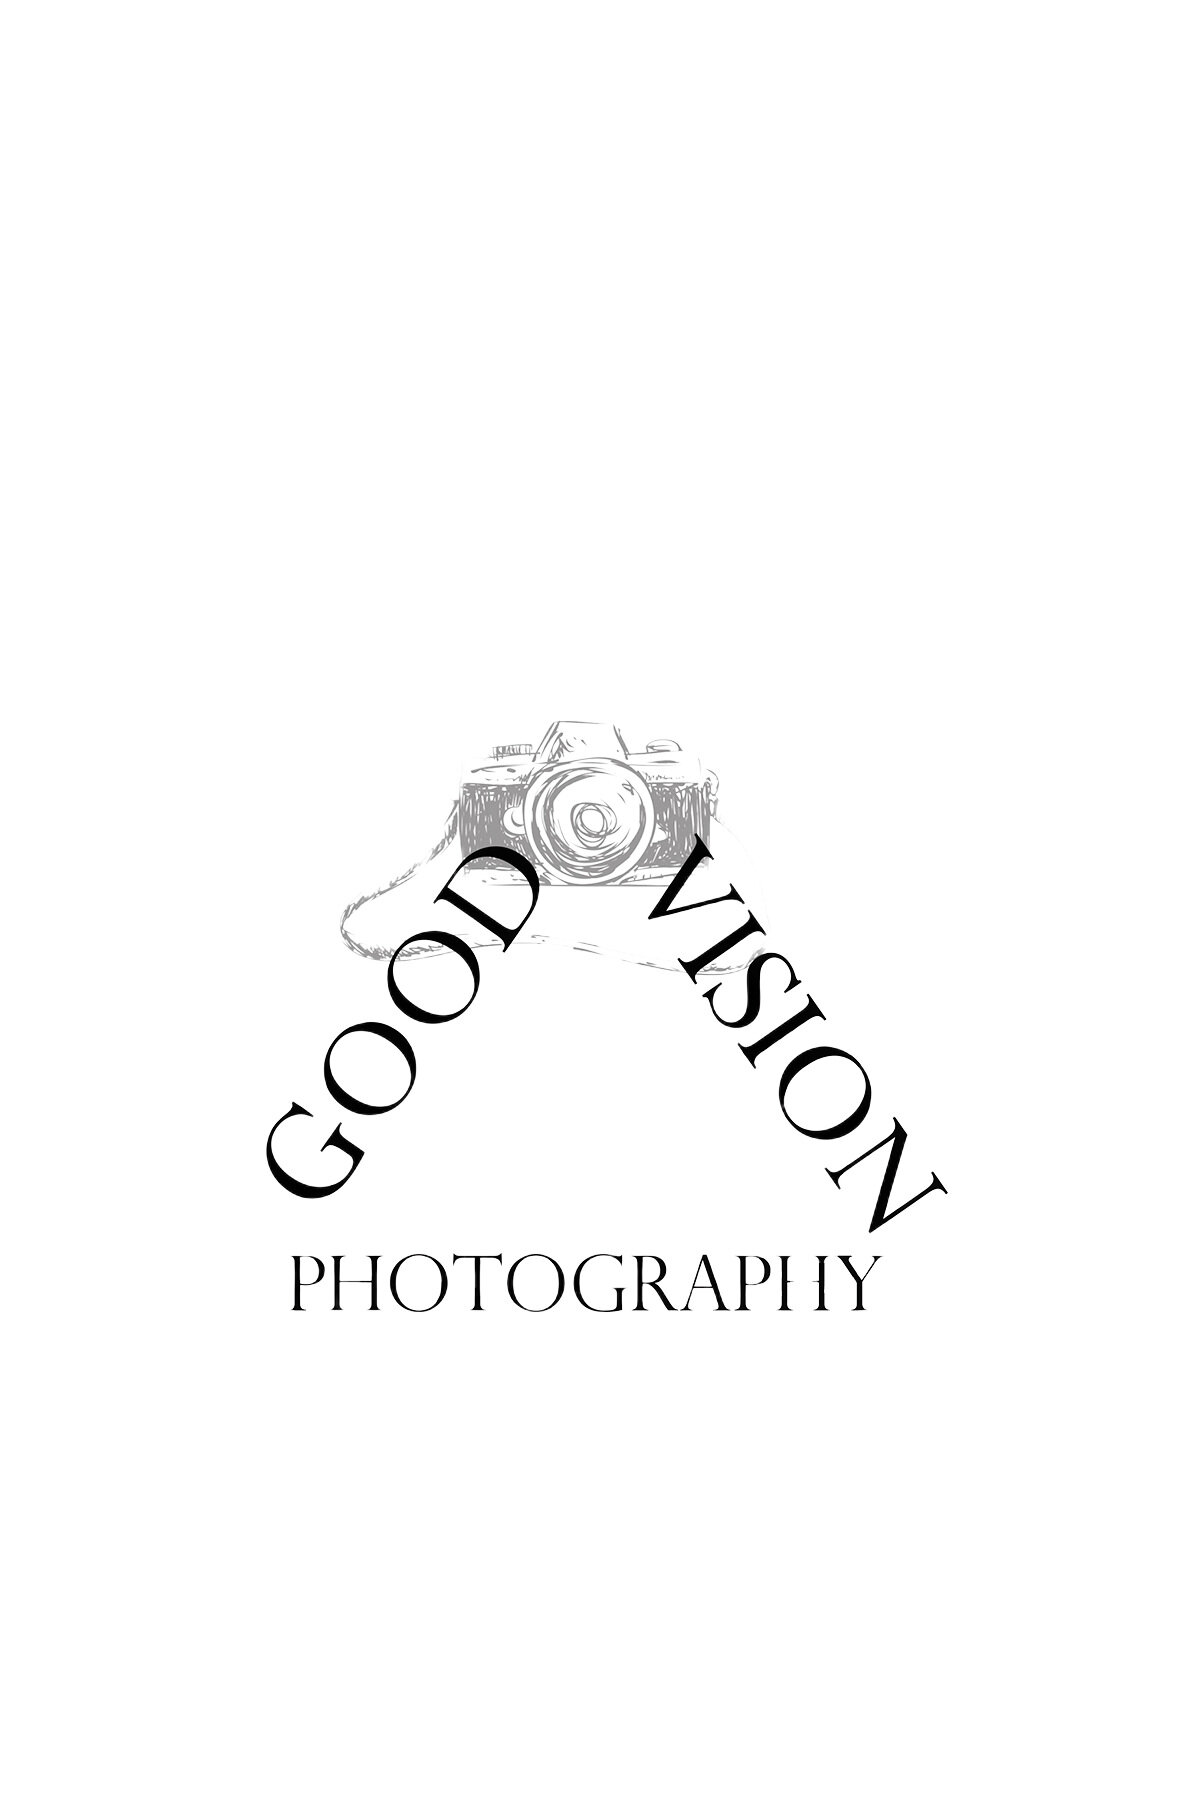 Goodvisionphotography